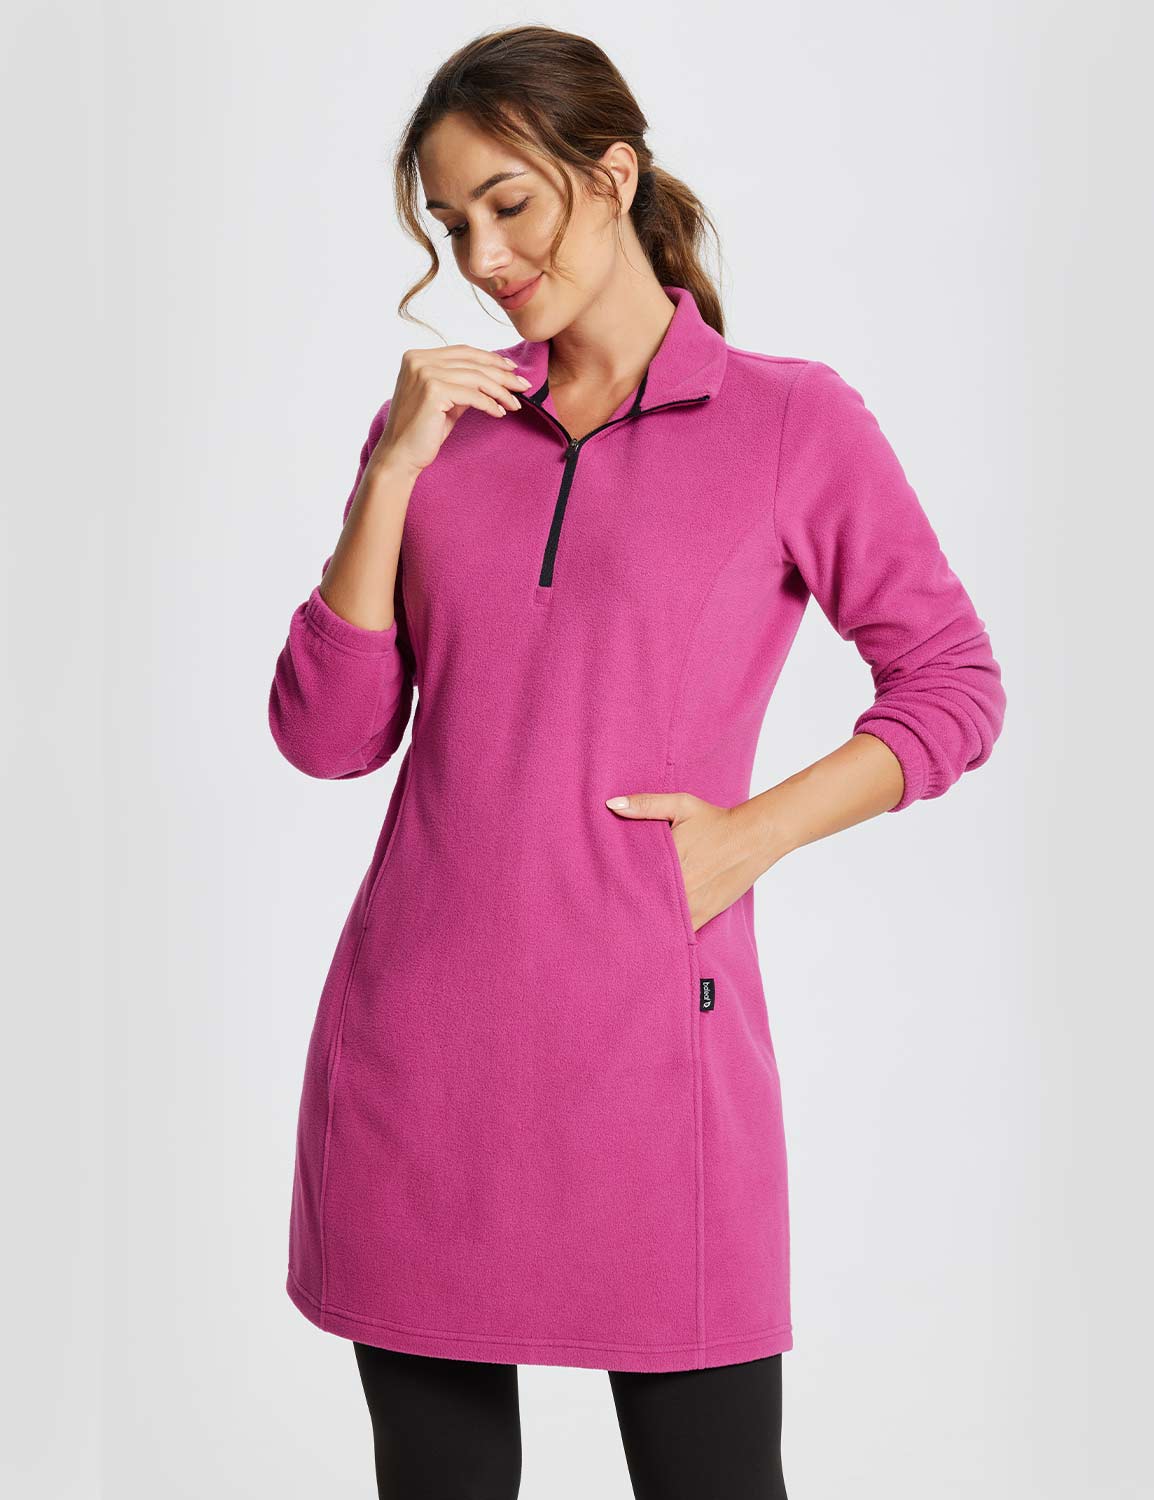 Baleaf Women's Long-Sleeve Quarter Zip Thermal Dress dga069 Violet Rose Main